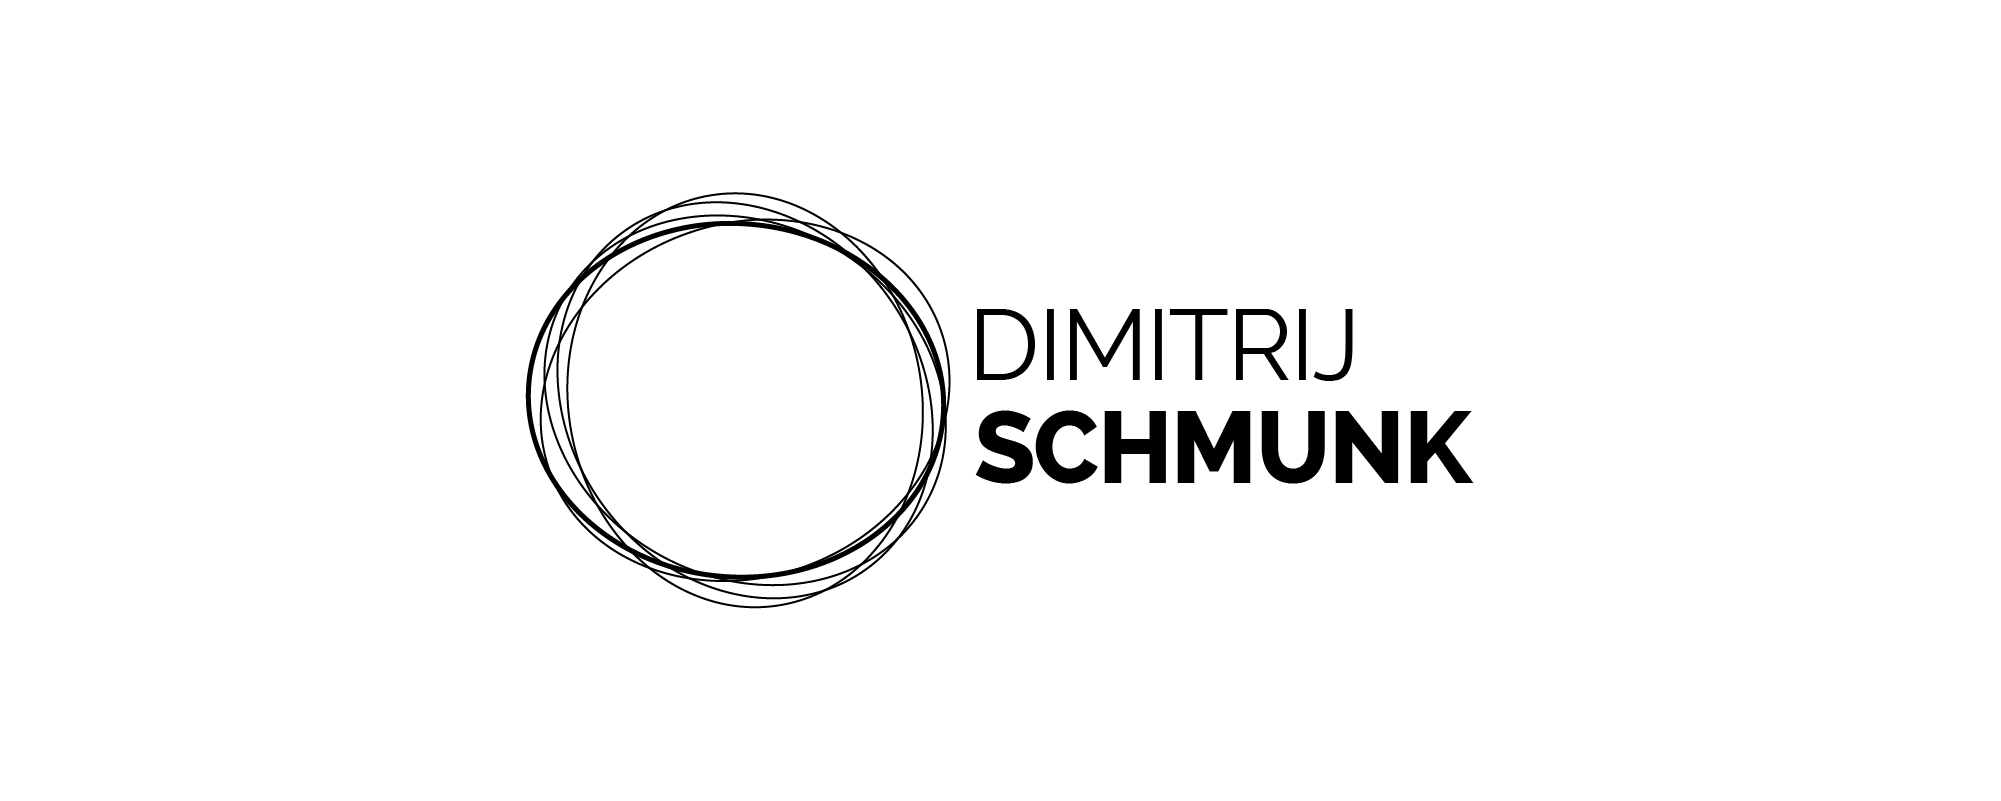 Logo Dimitrij Schmunk - Wort-Bildmarke - Alternative Variante I